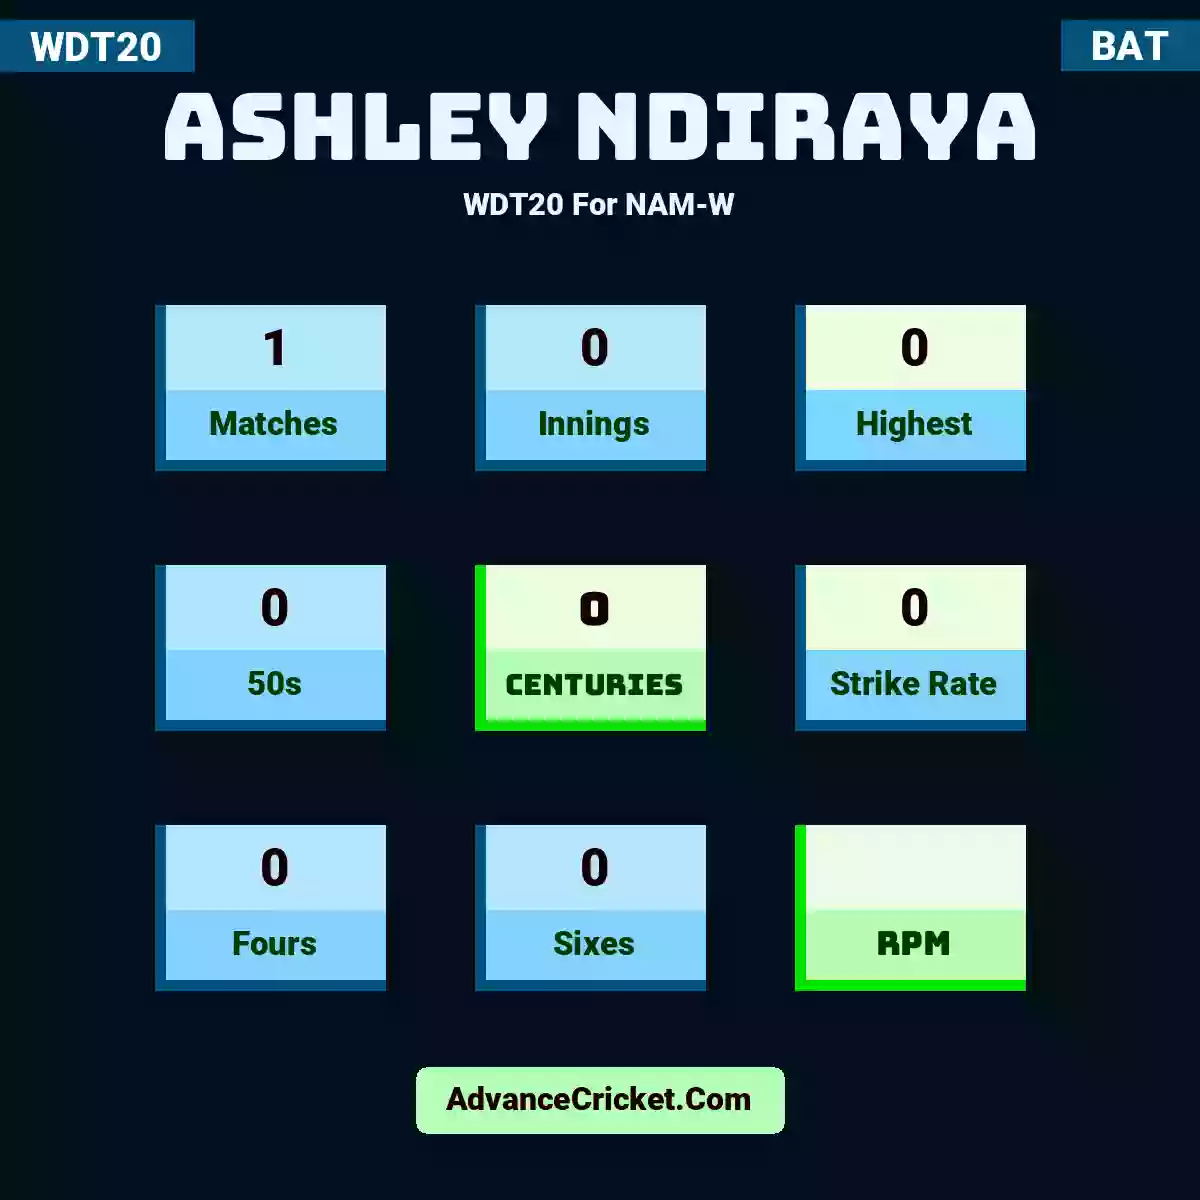 Ashley Ndiraya WDT20  For NAM-W, Ashley Ndiraya played 1 matches, scored 0 runs as highest, 0 half-centuries, and 0 centuries, with a strike rate of 0. A.Ndiraya hit 0 fours and 0 sixes.